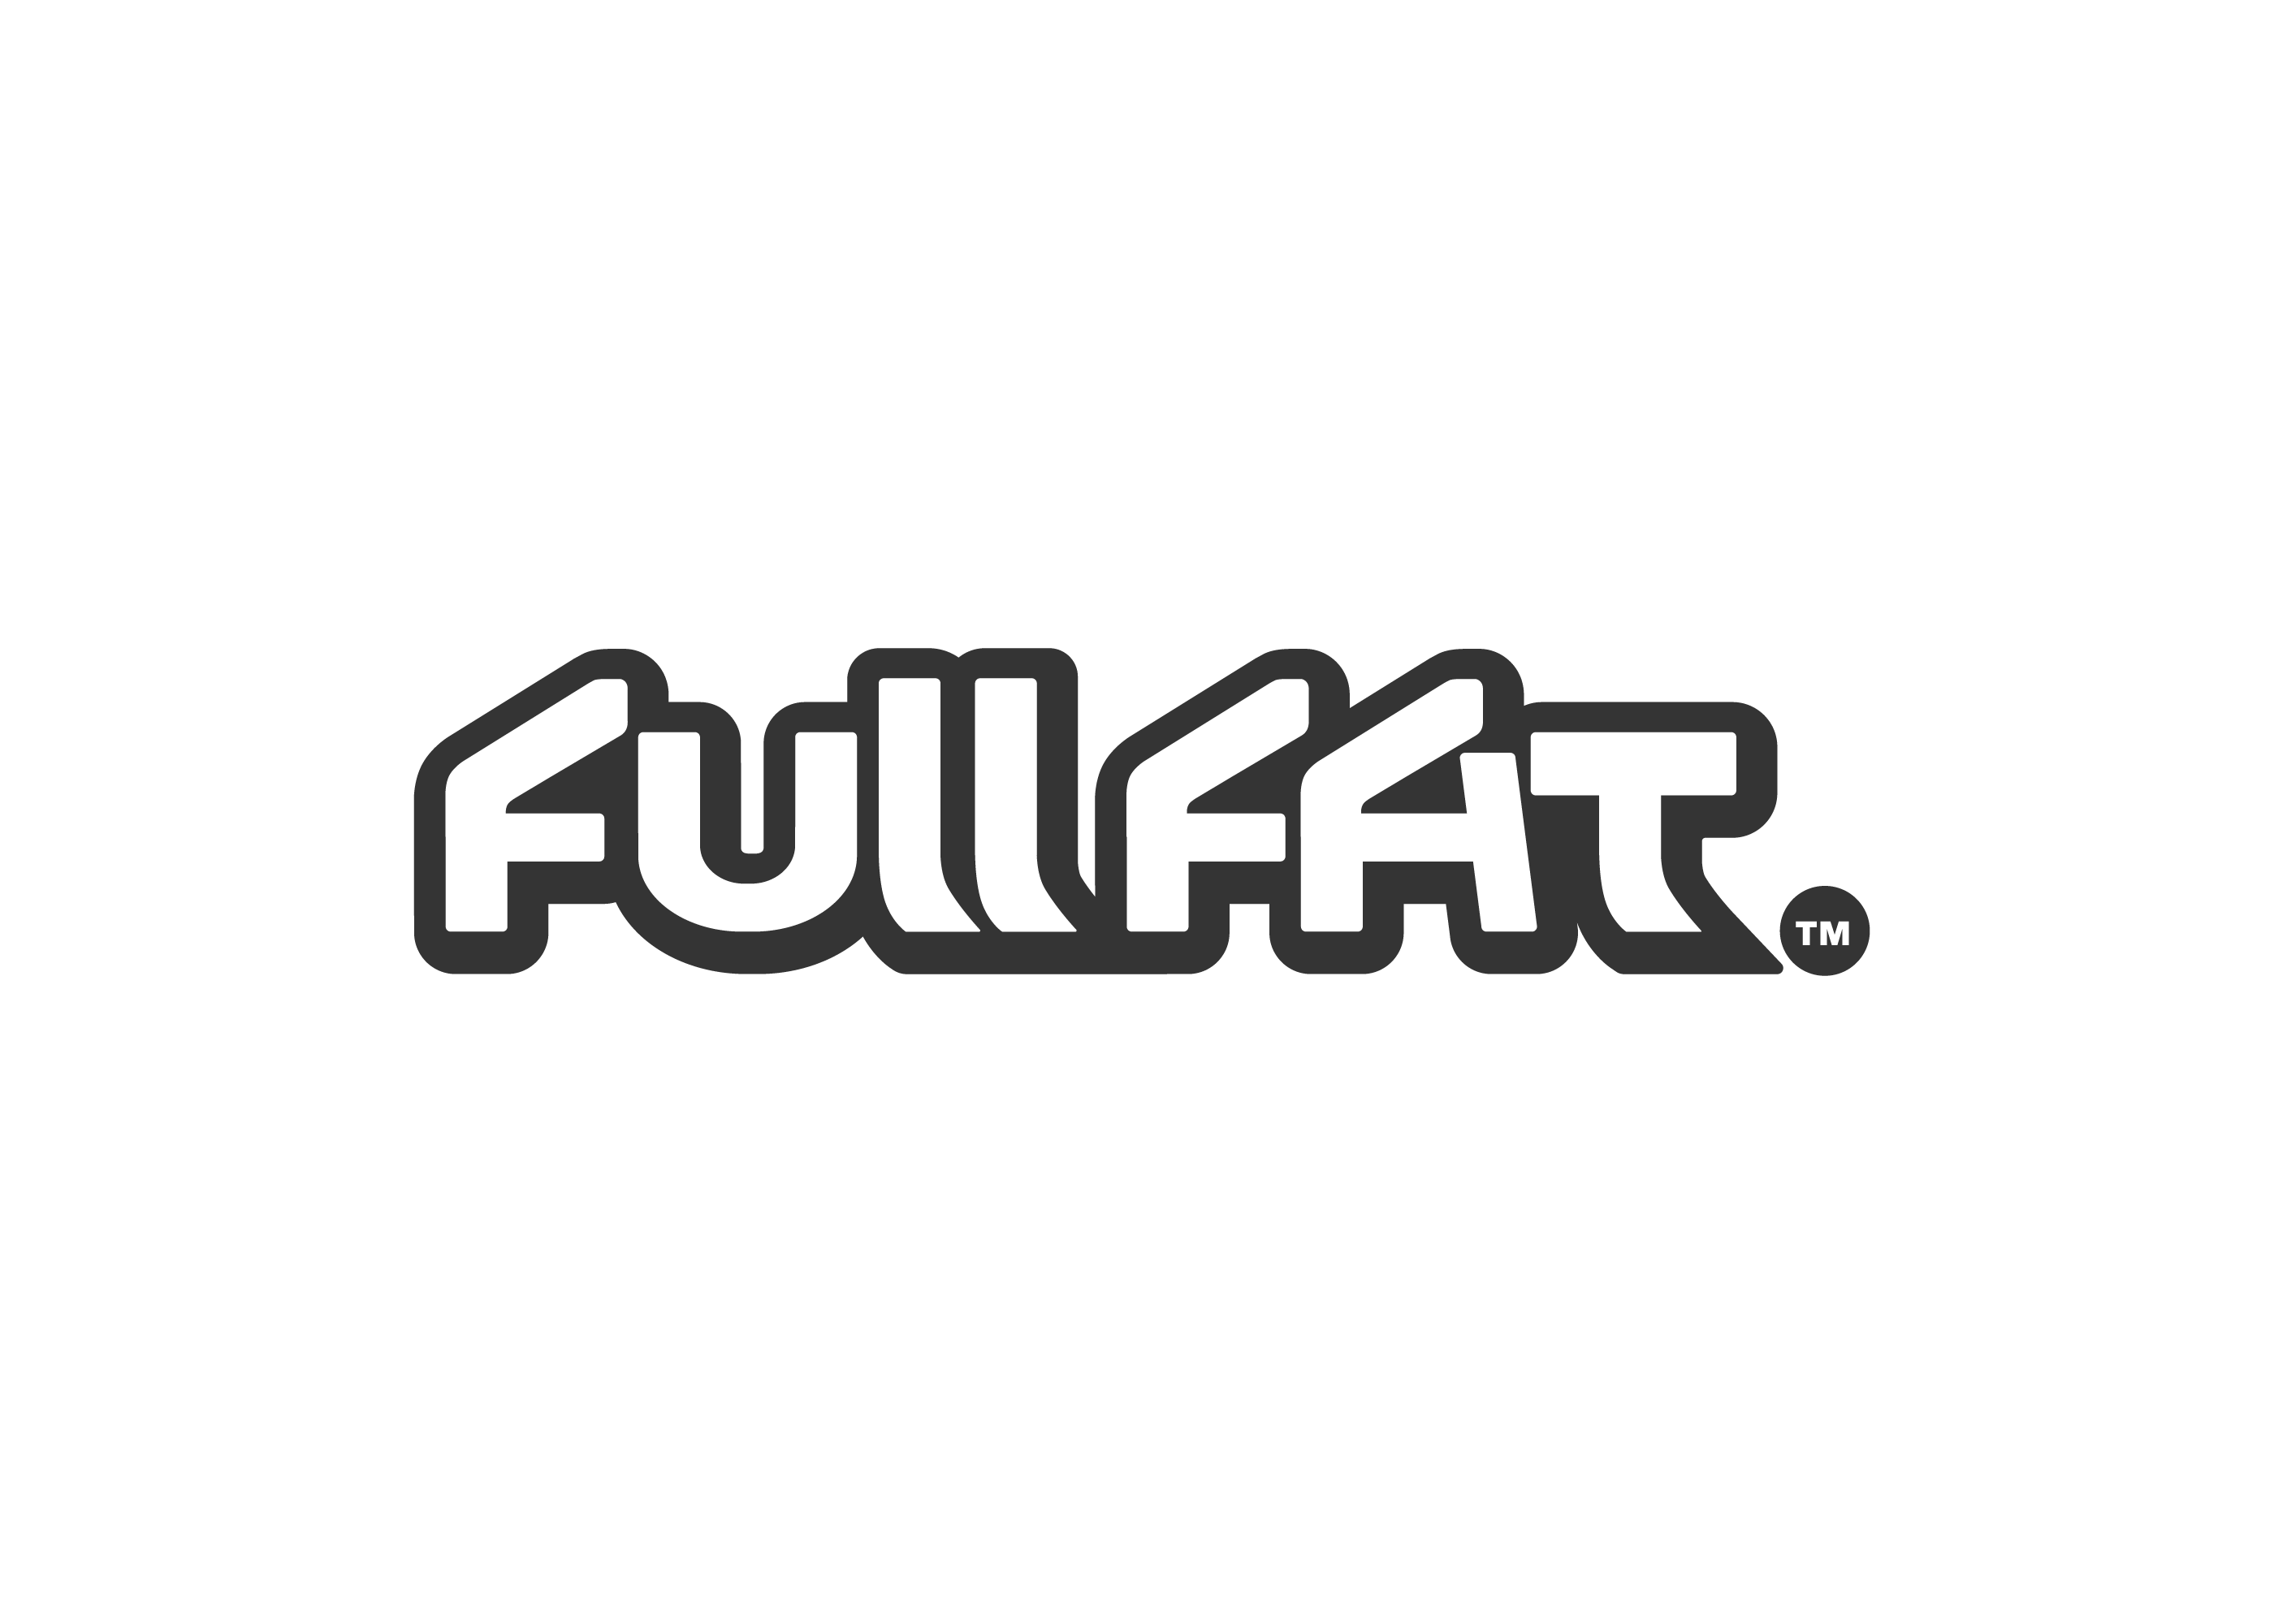 Full Fat Logo